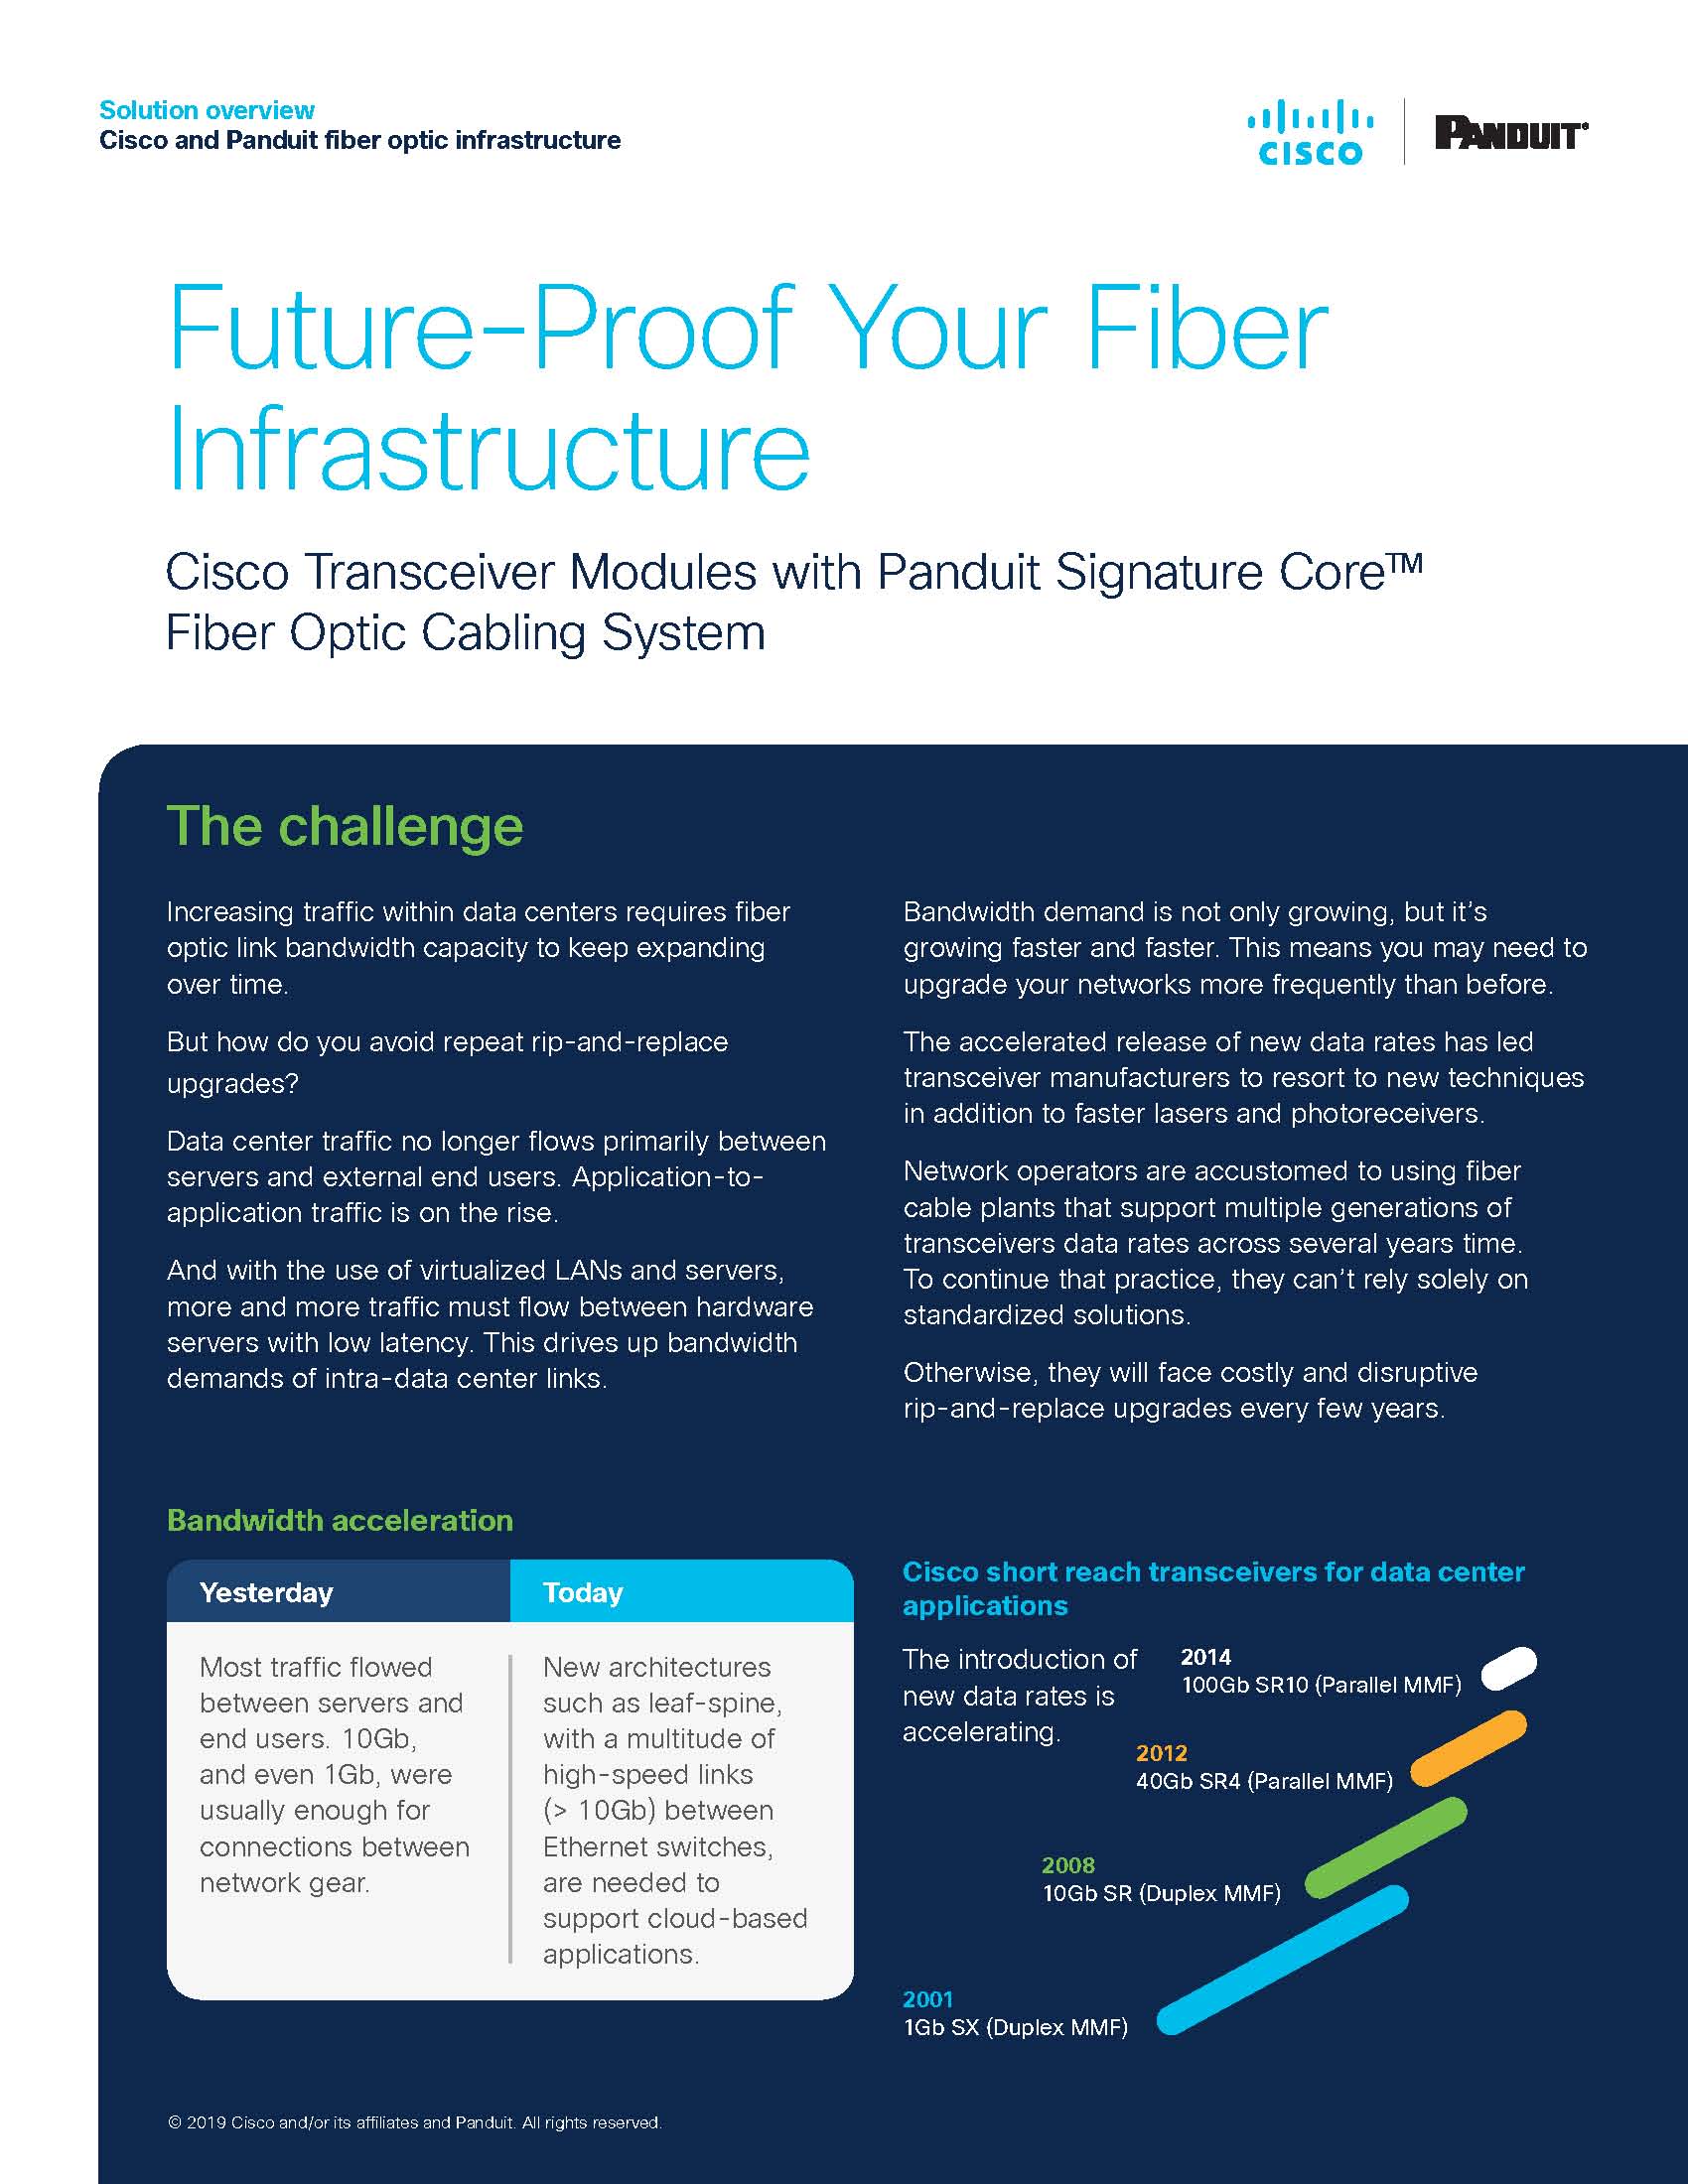 Future-Proof Your Fiber Infrastructure